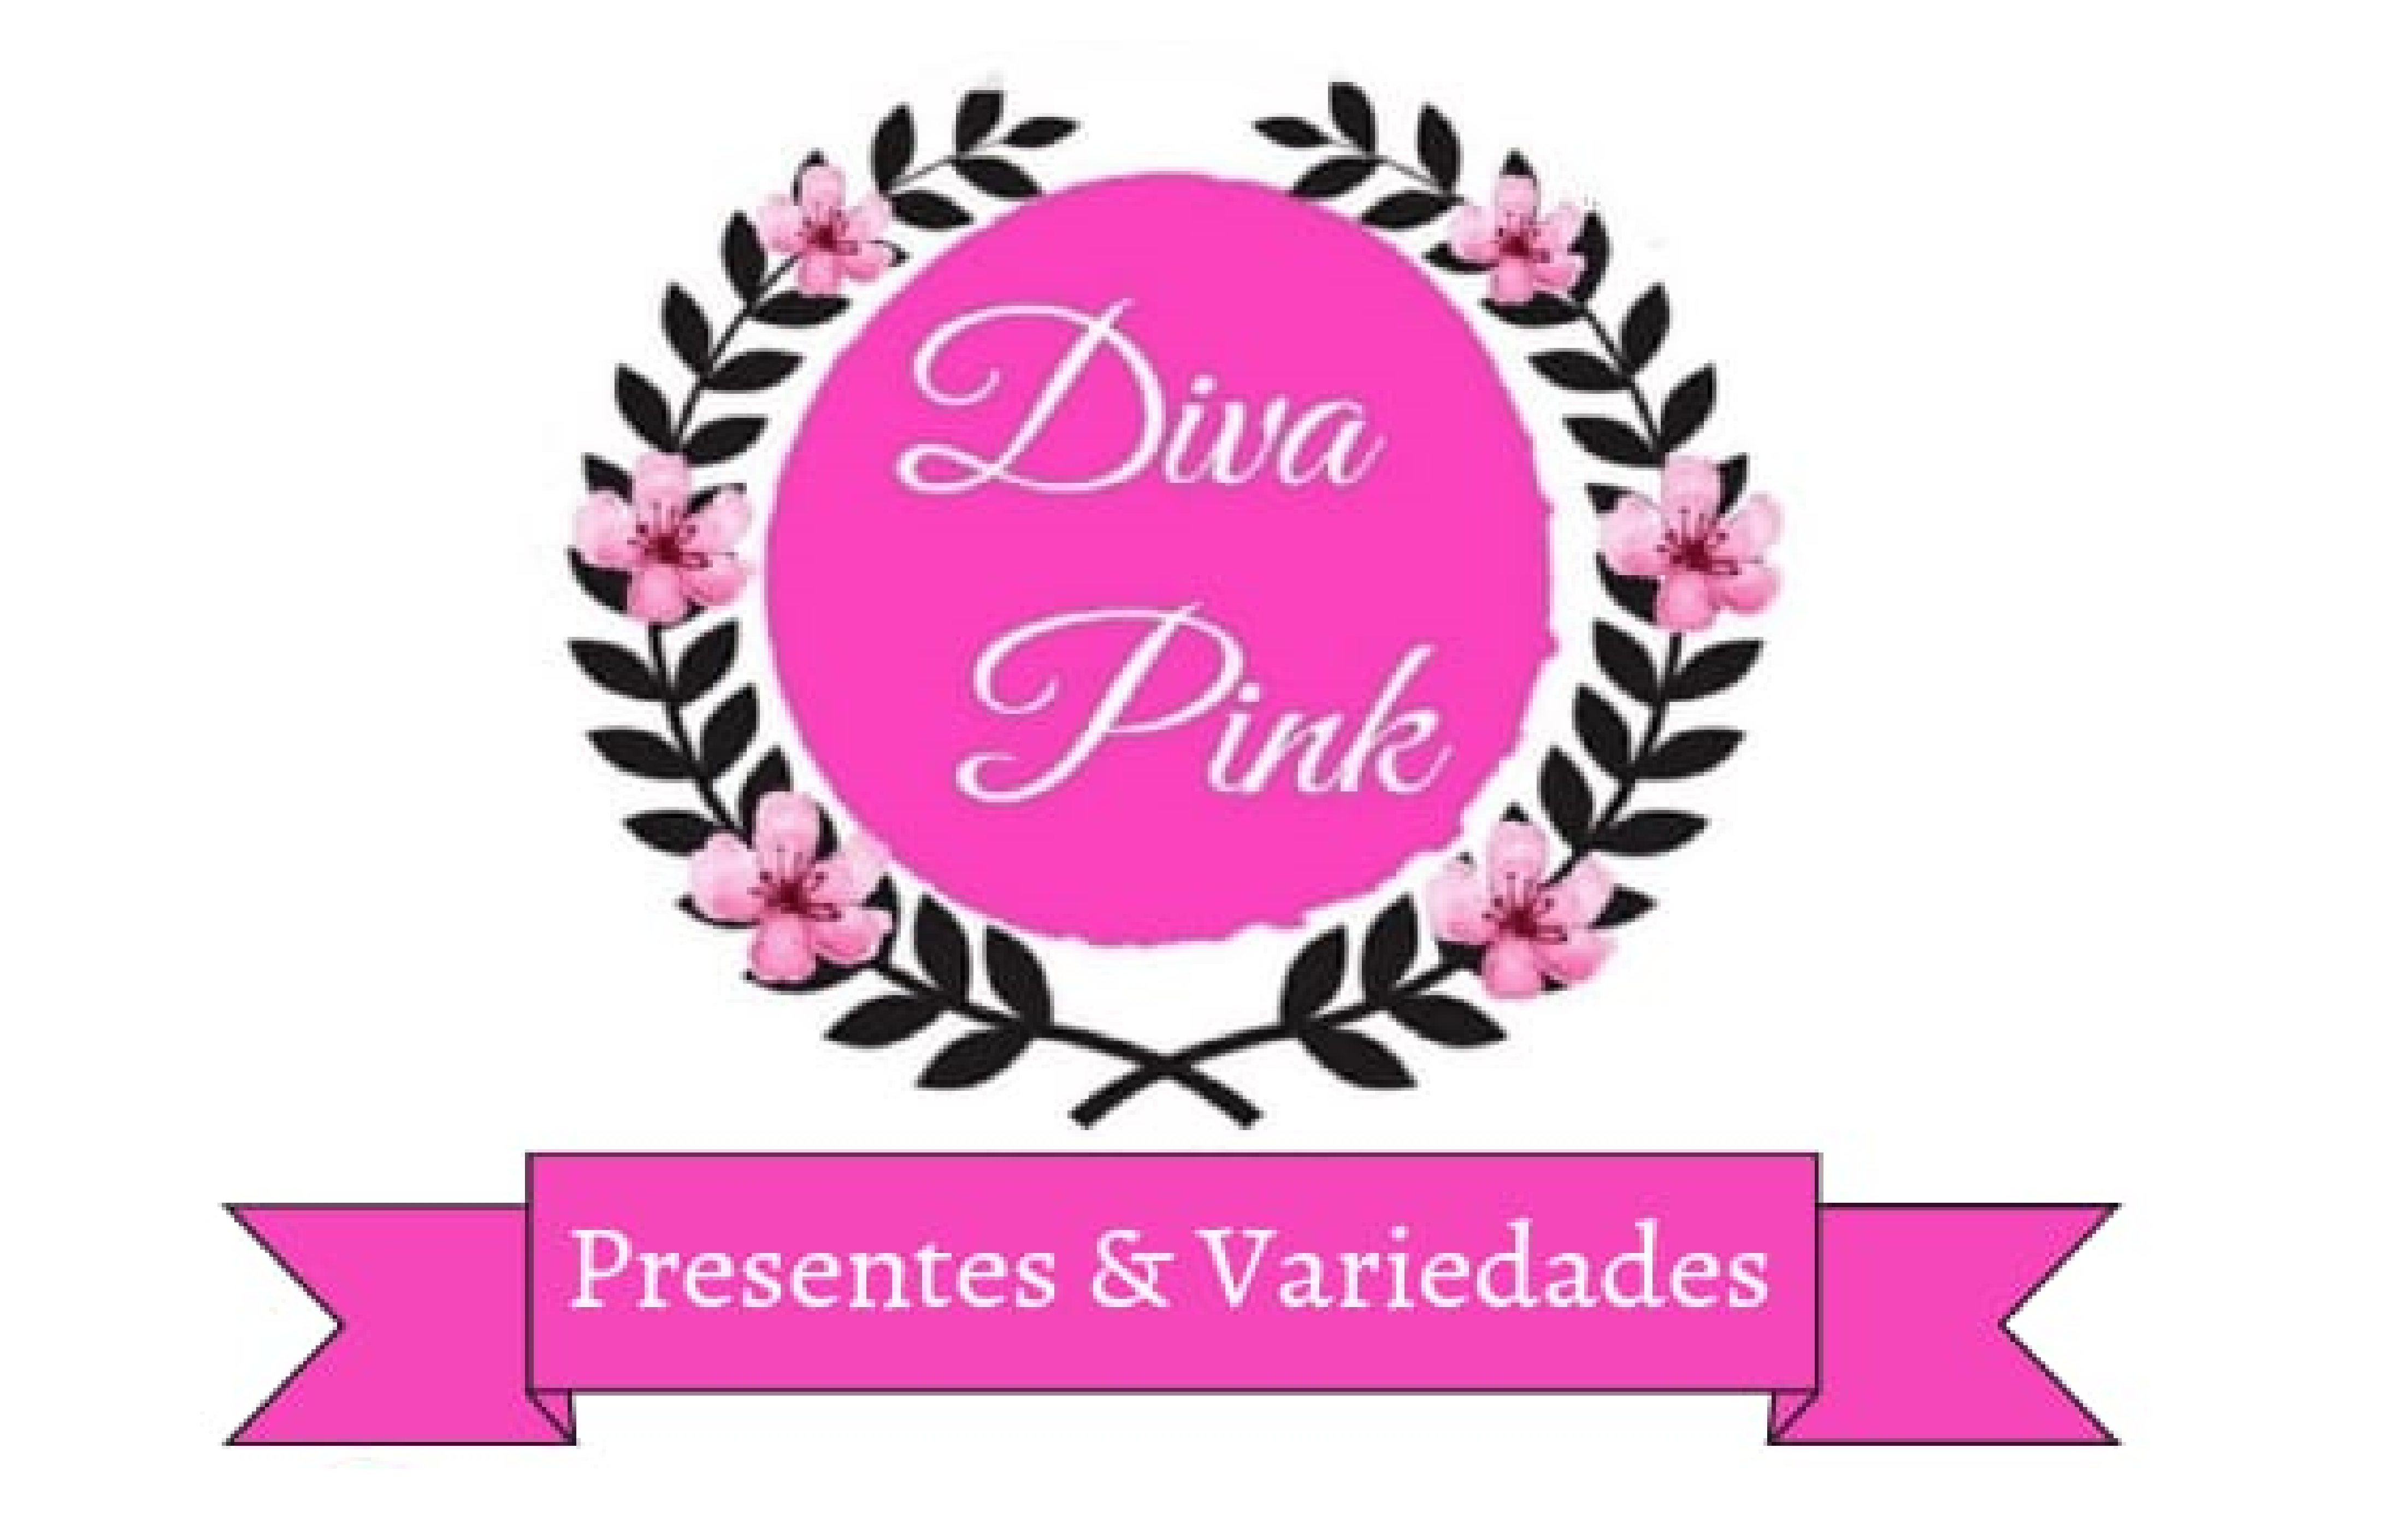 DIVA PINK PRESENTES & VARIEDADES